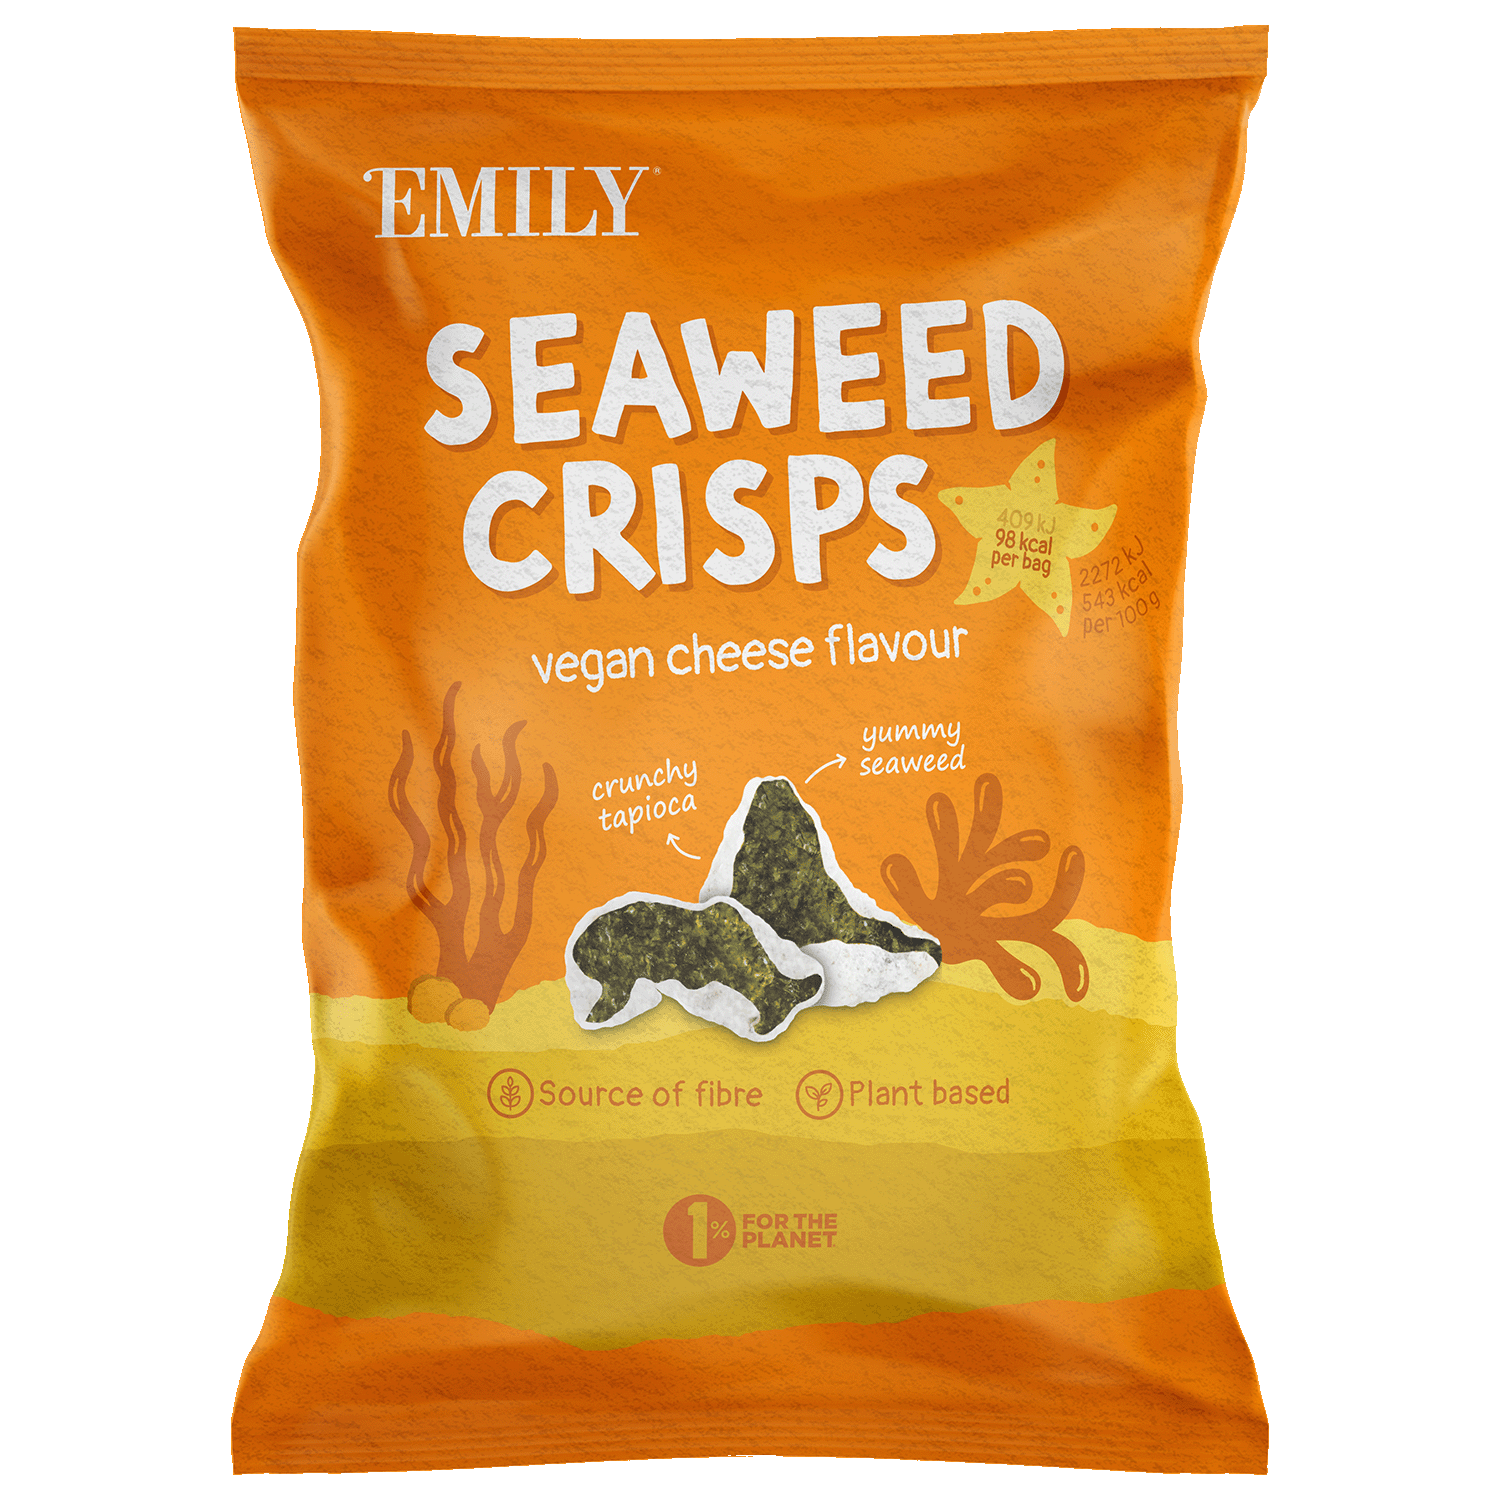 Seaweed Crisps Vegan Cheese Flavour, 18g